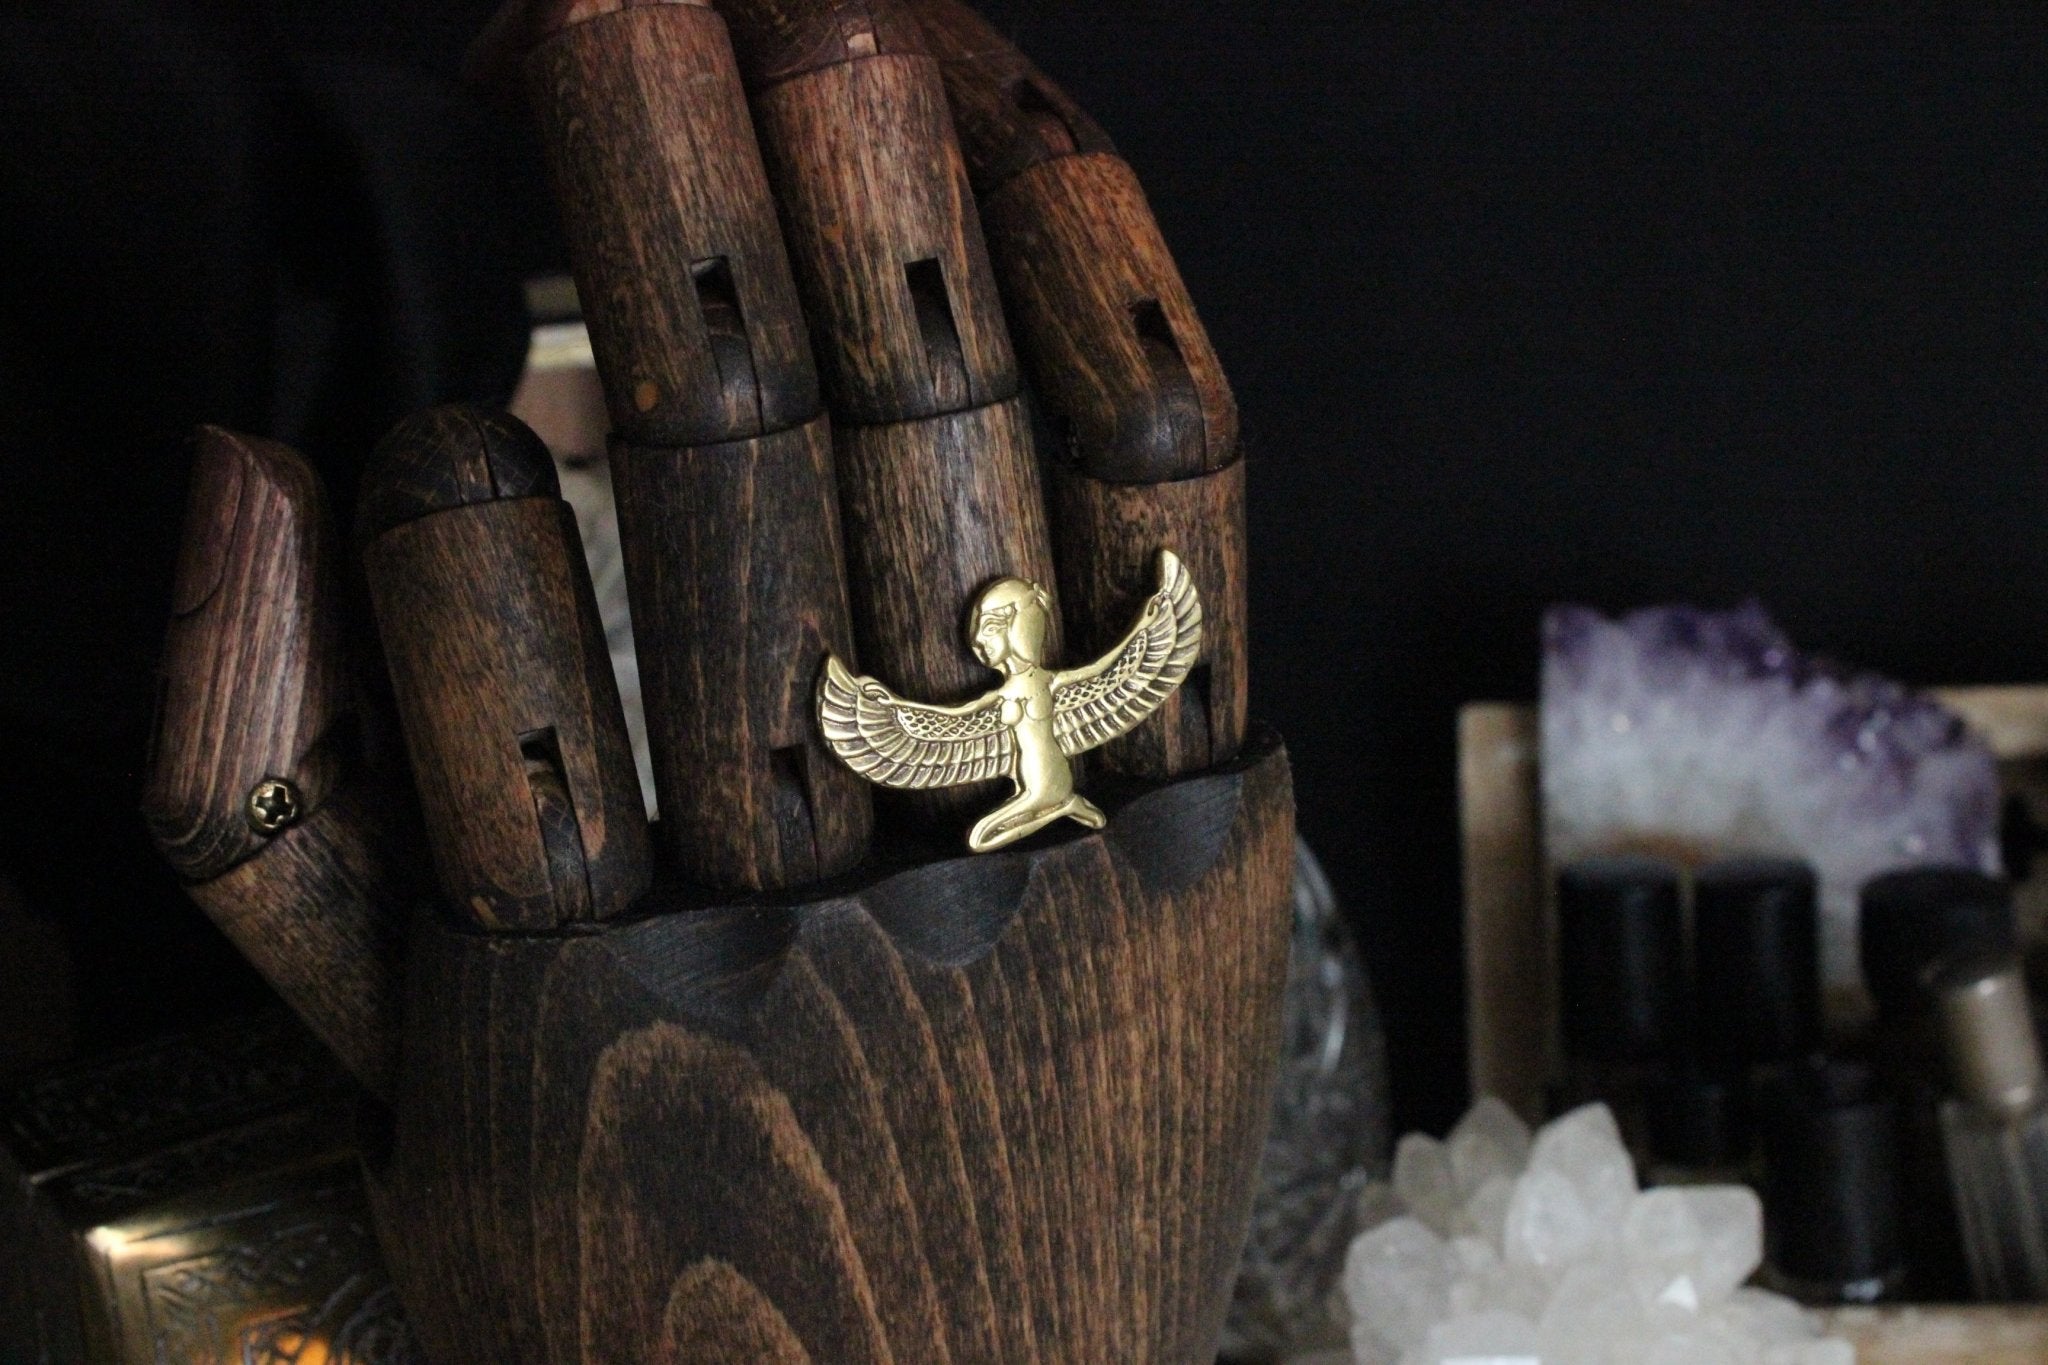 Egyptian Brass Isis Ring - Golden Treasure Box